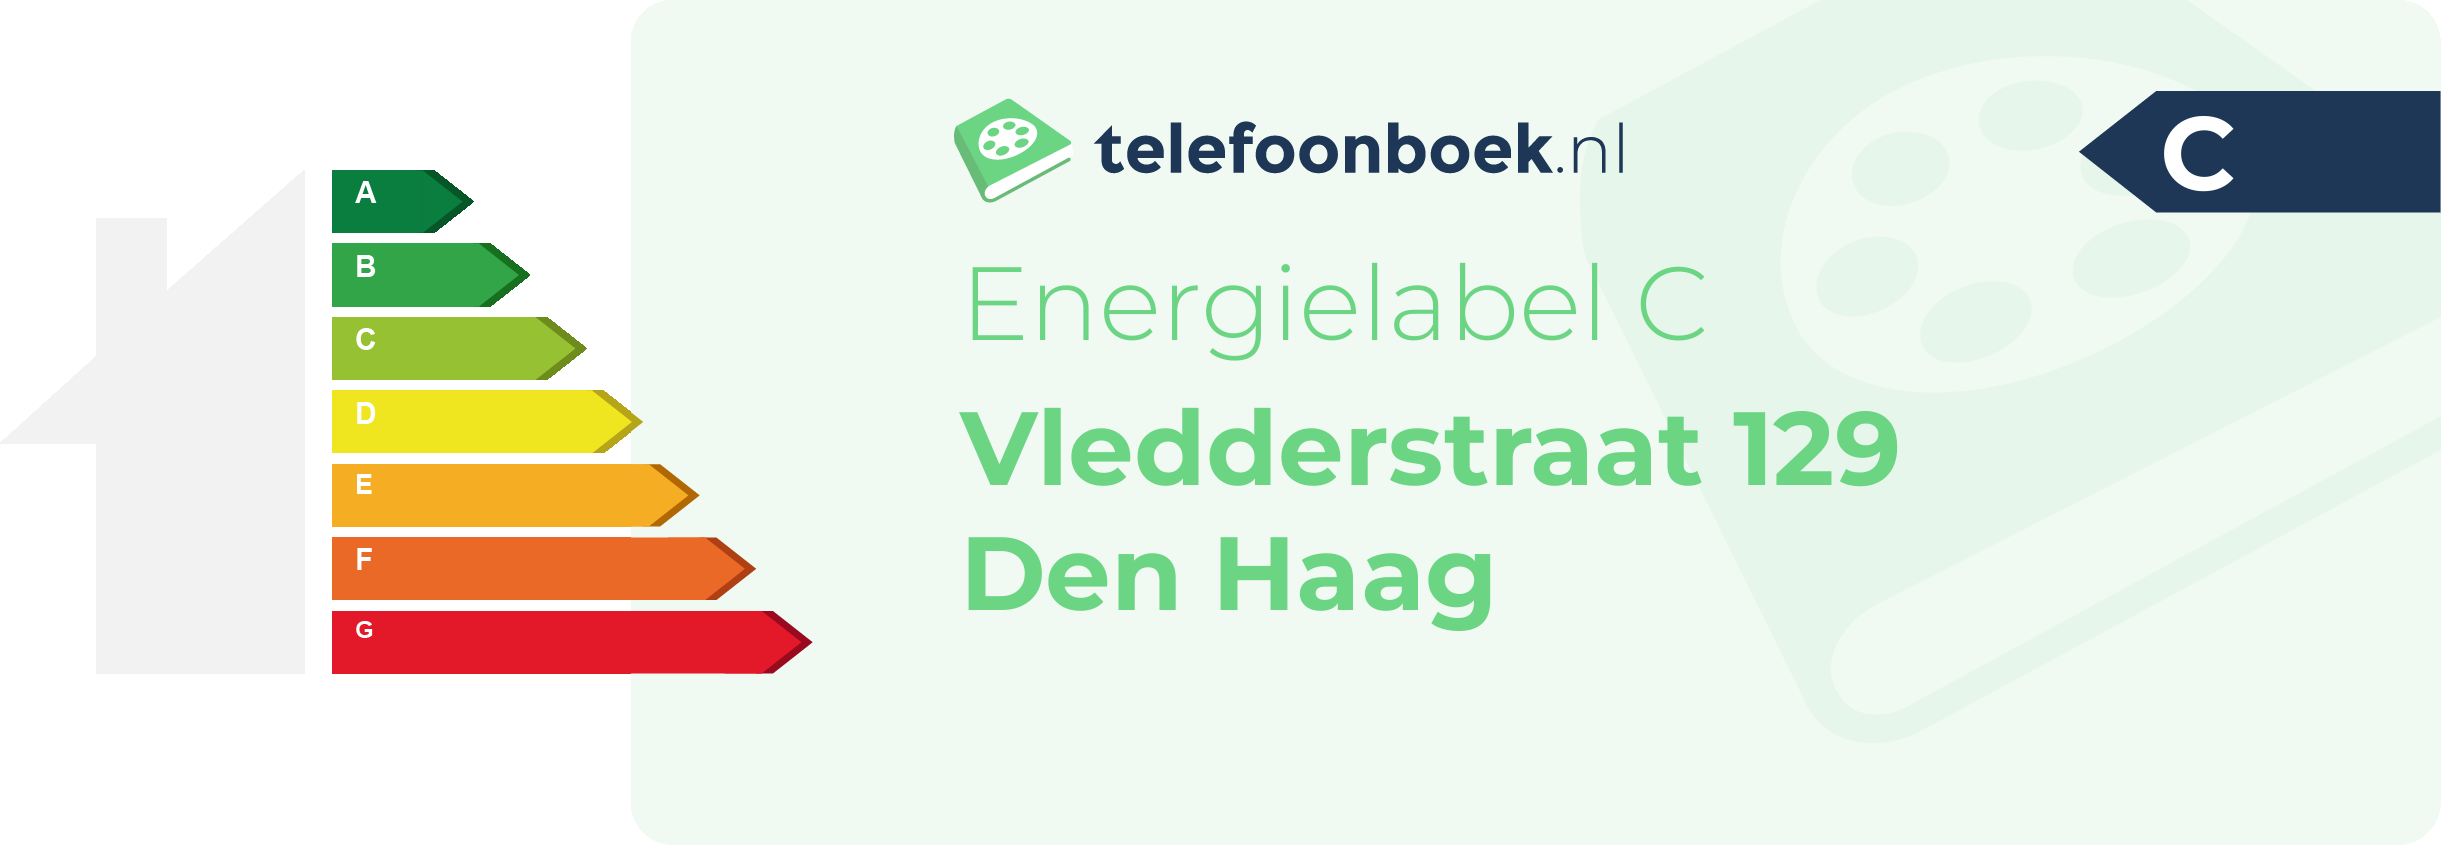 Energielabel Vledderstraat 129 Den Haag